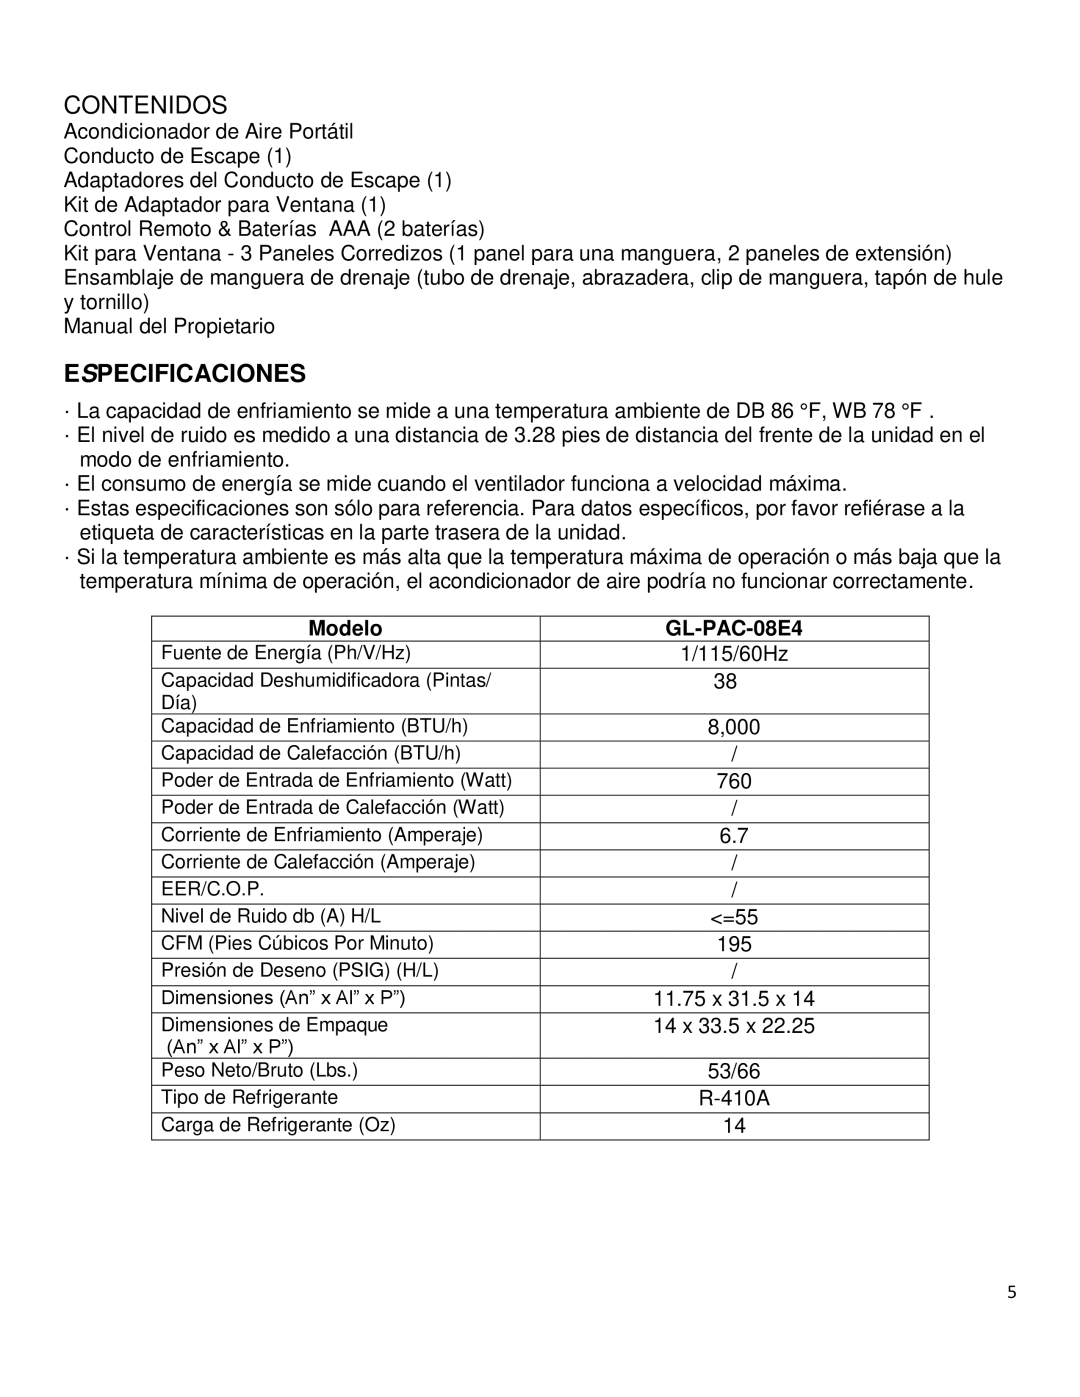 Soleus Air GL-PAC-08E4 manual Especificaciones, Modelo 